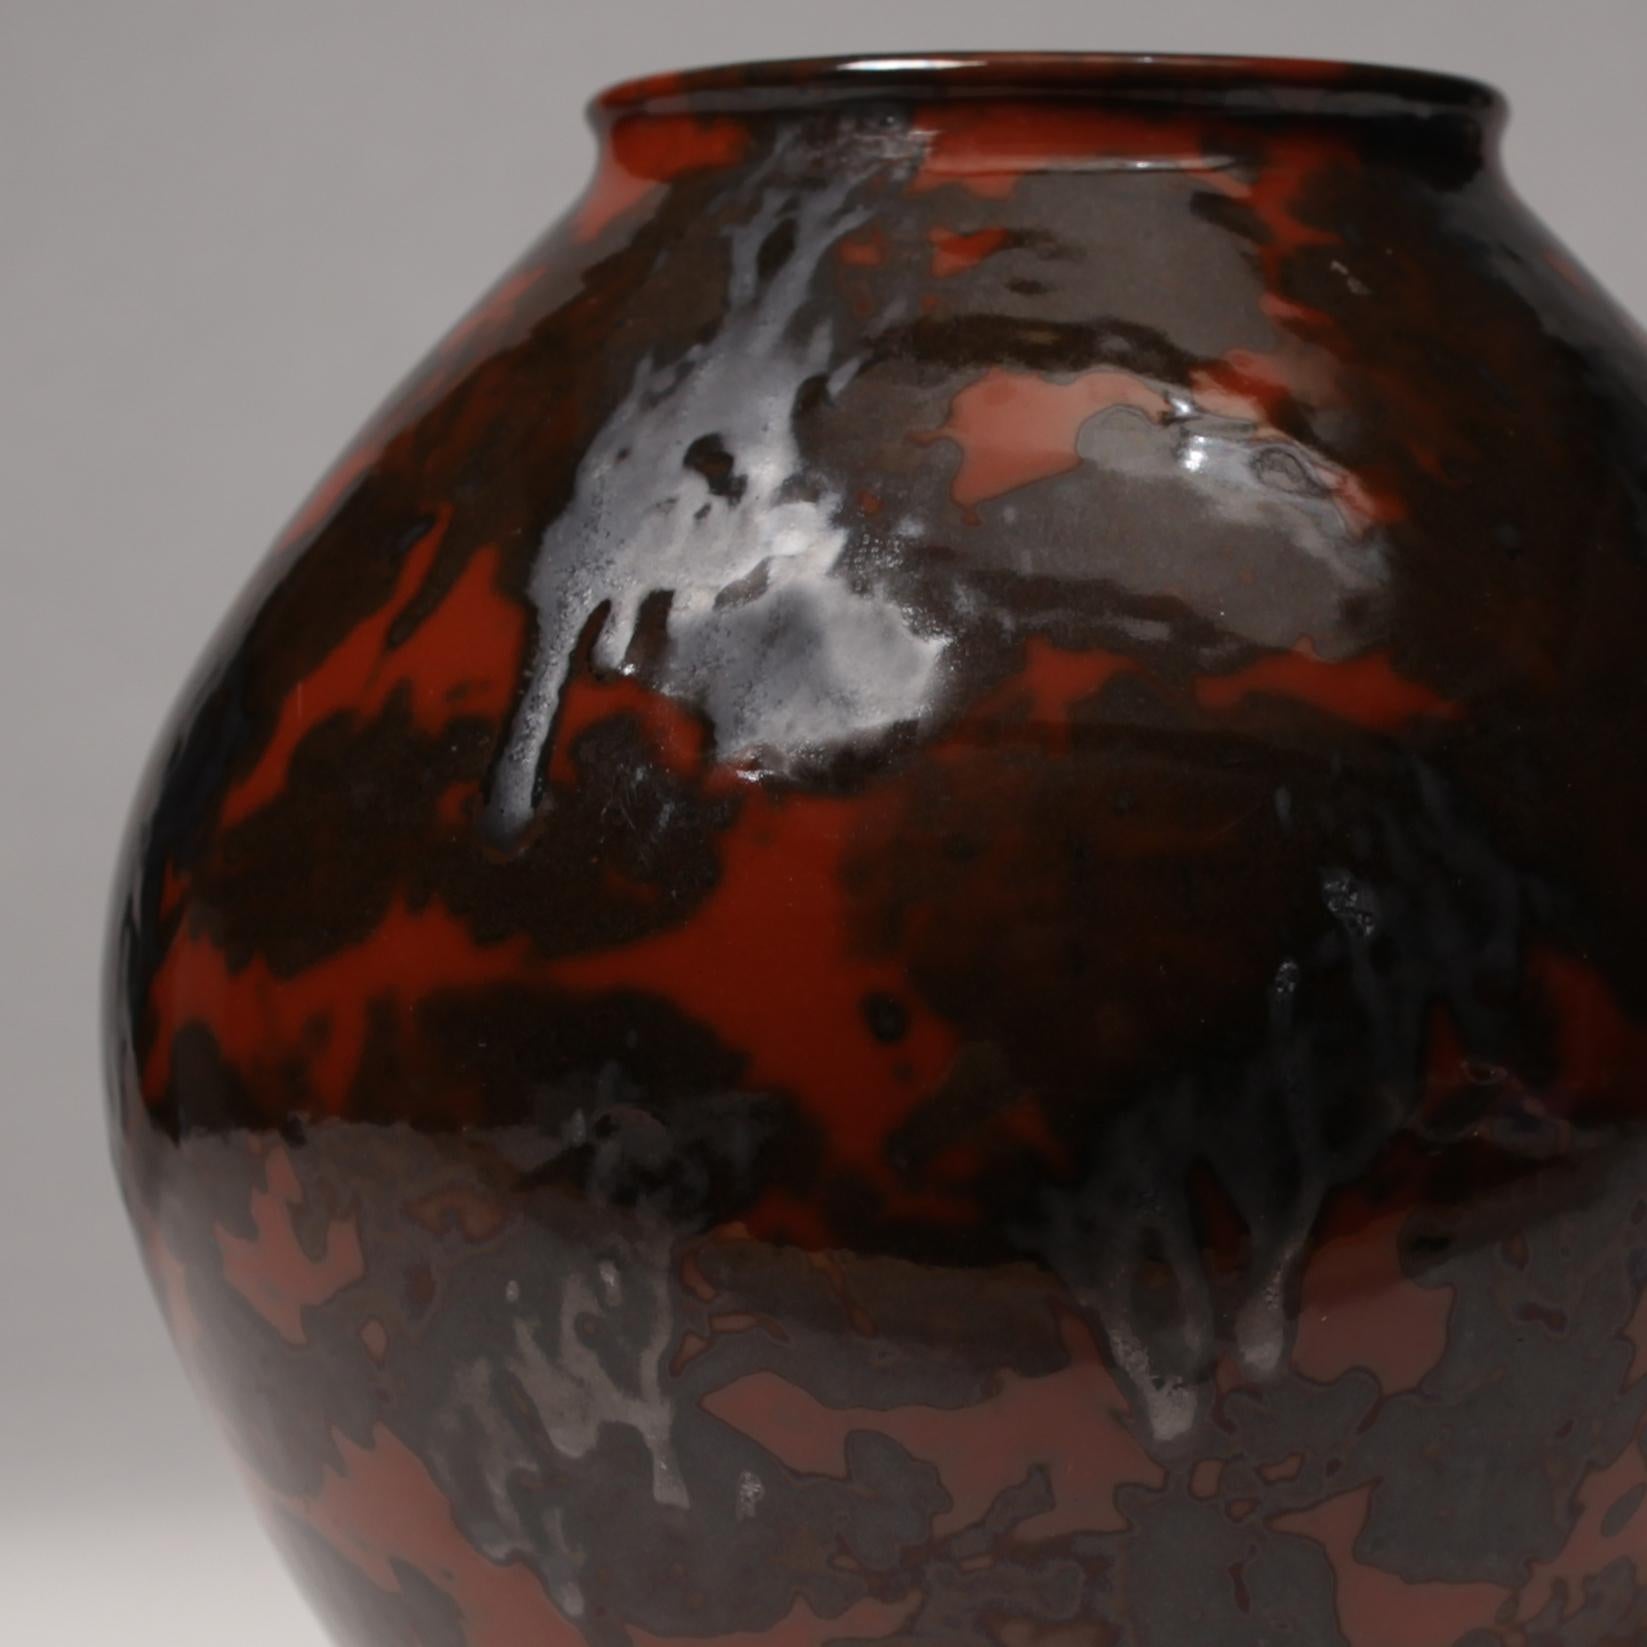 Bulbous Art Deco vase with signature brick red and metallic black glaze produced by Dutch manufacturer Eskaf, circa 1930.
 